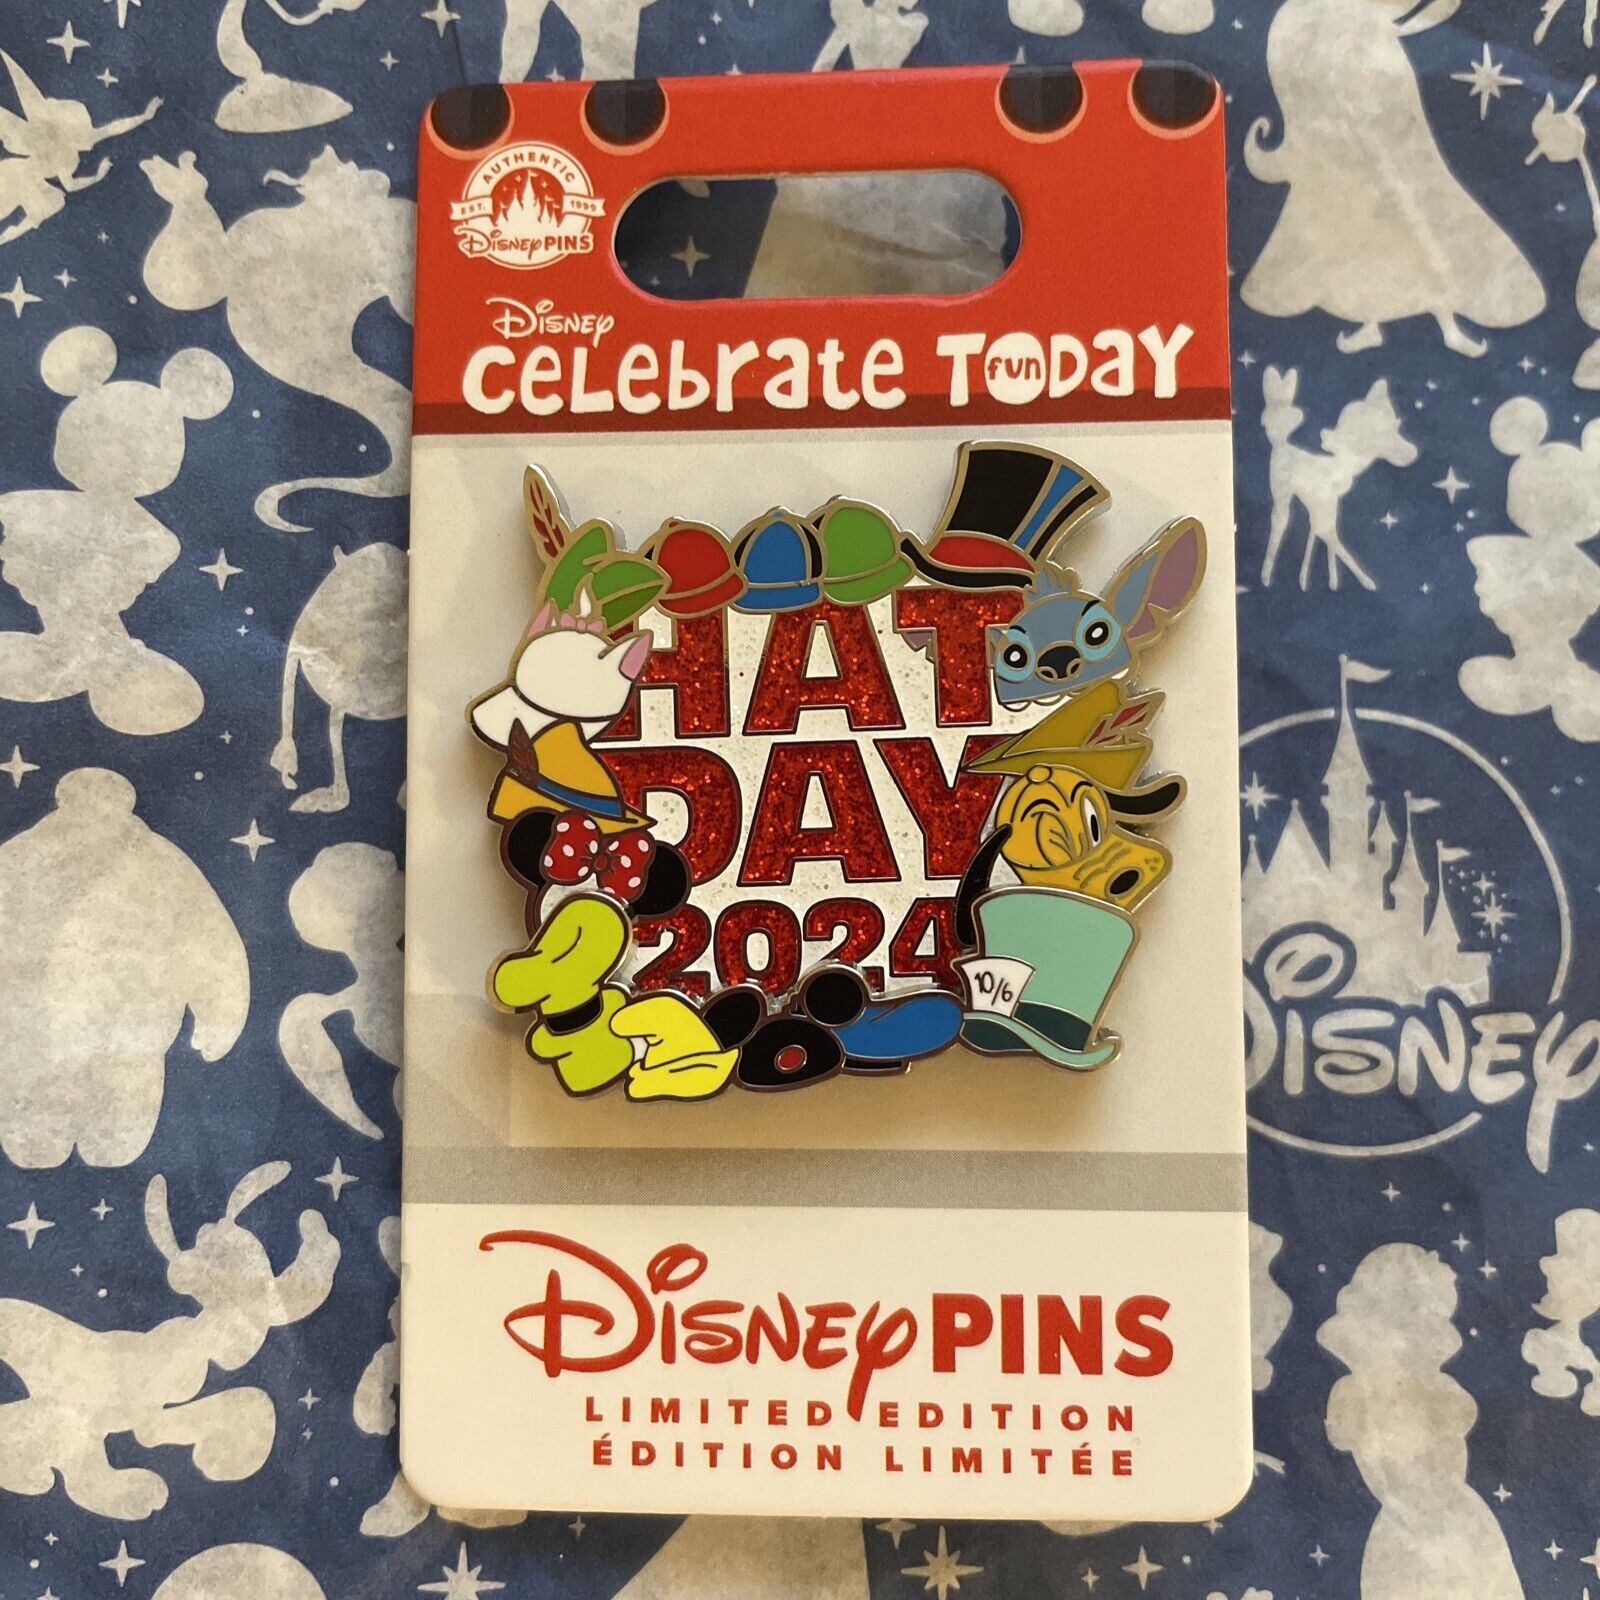 Disney Celebrate Today Hat Day 2024 Pin LE 2000 New Stitch Pluto Goofy